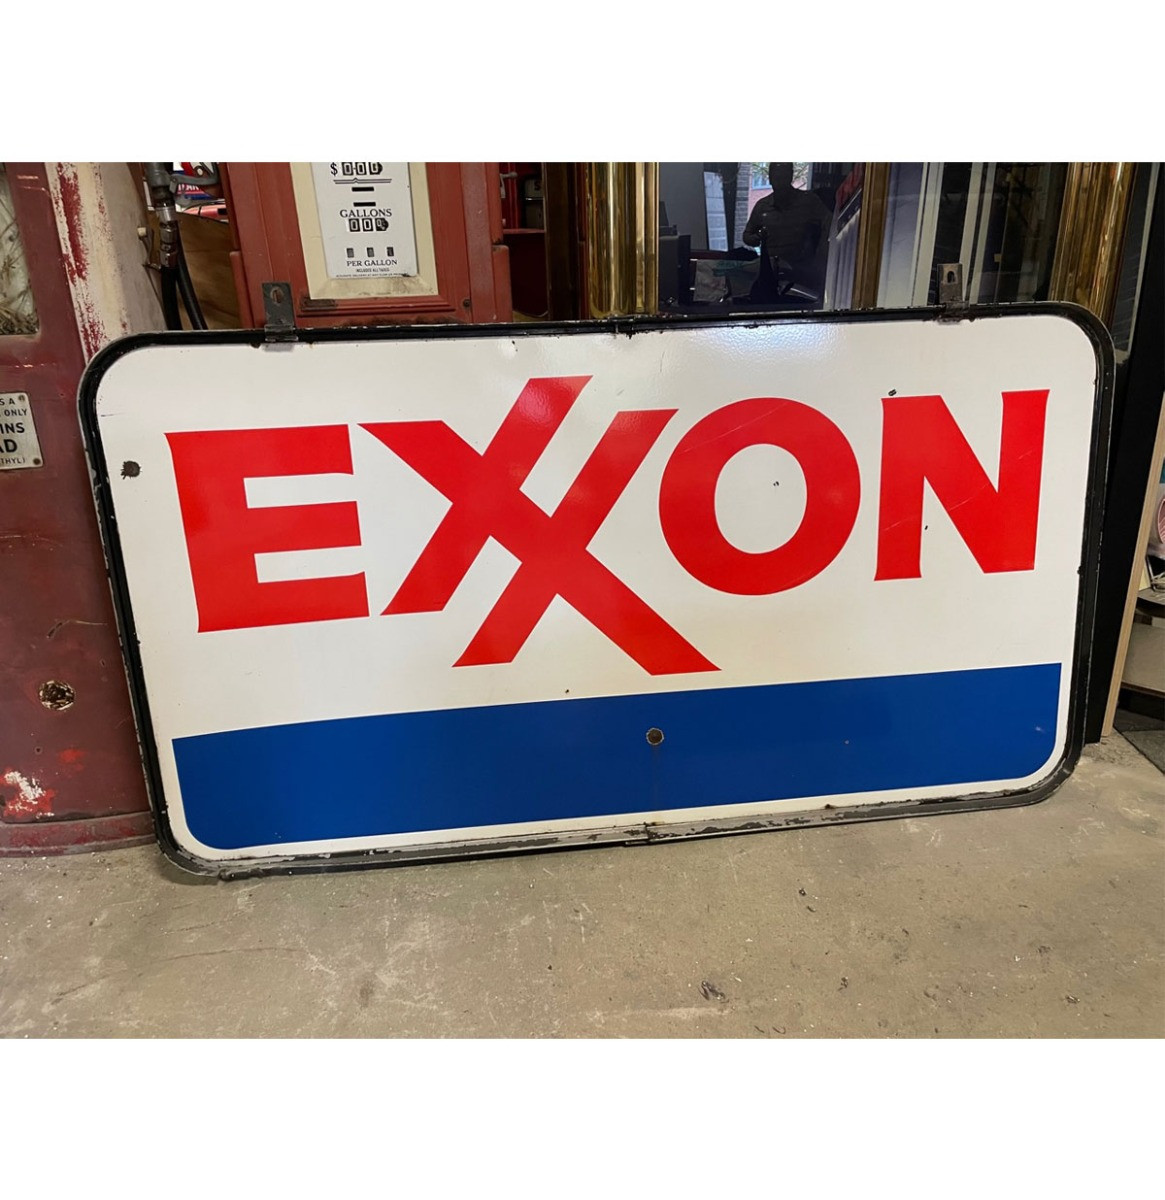 Exxon Emaille Bord - Met Frame - Dubbelzijdig - 210 x 115 cm